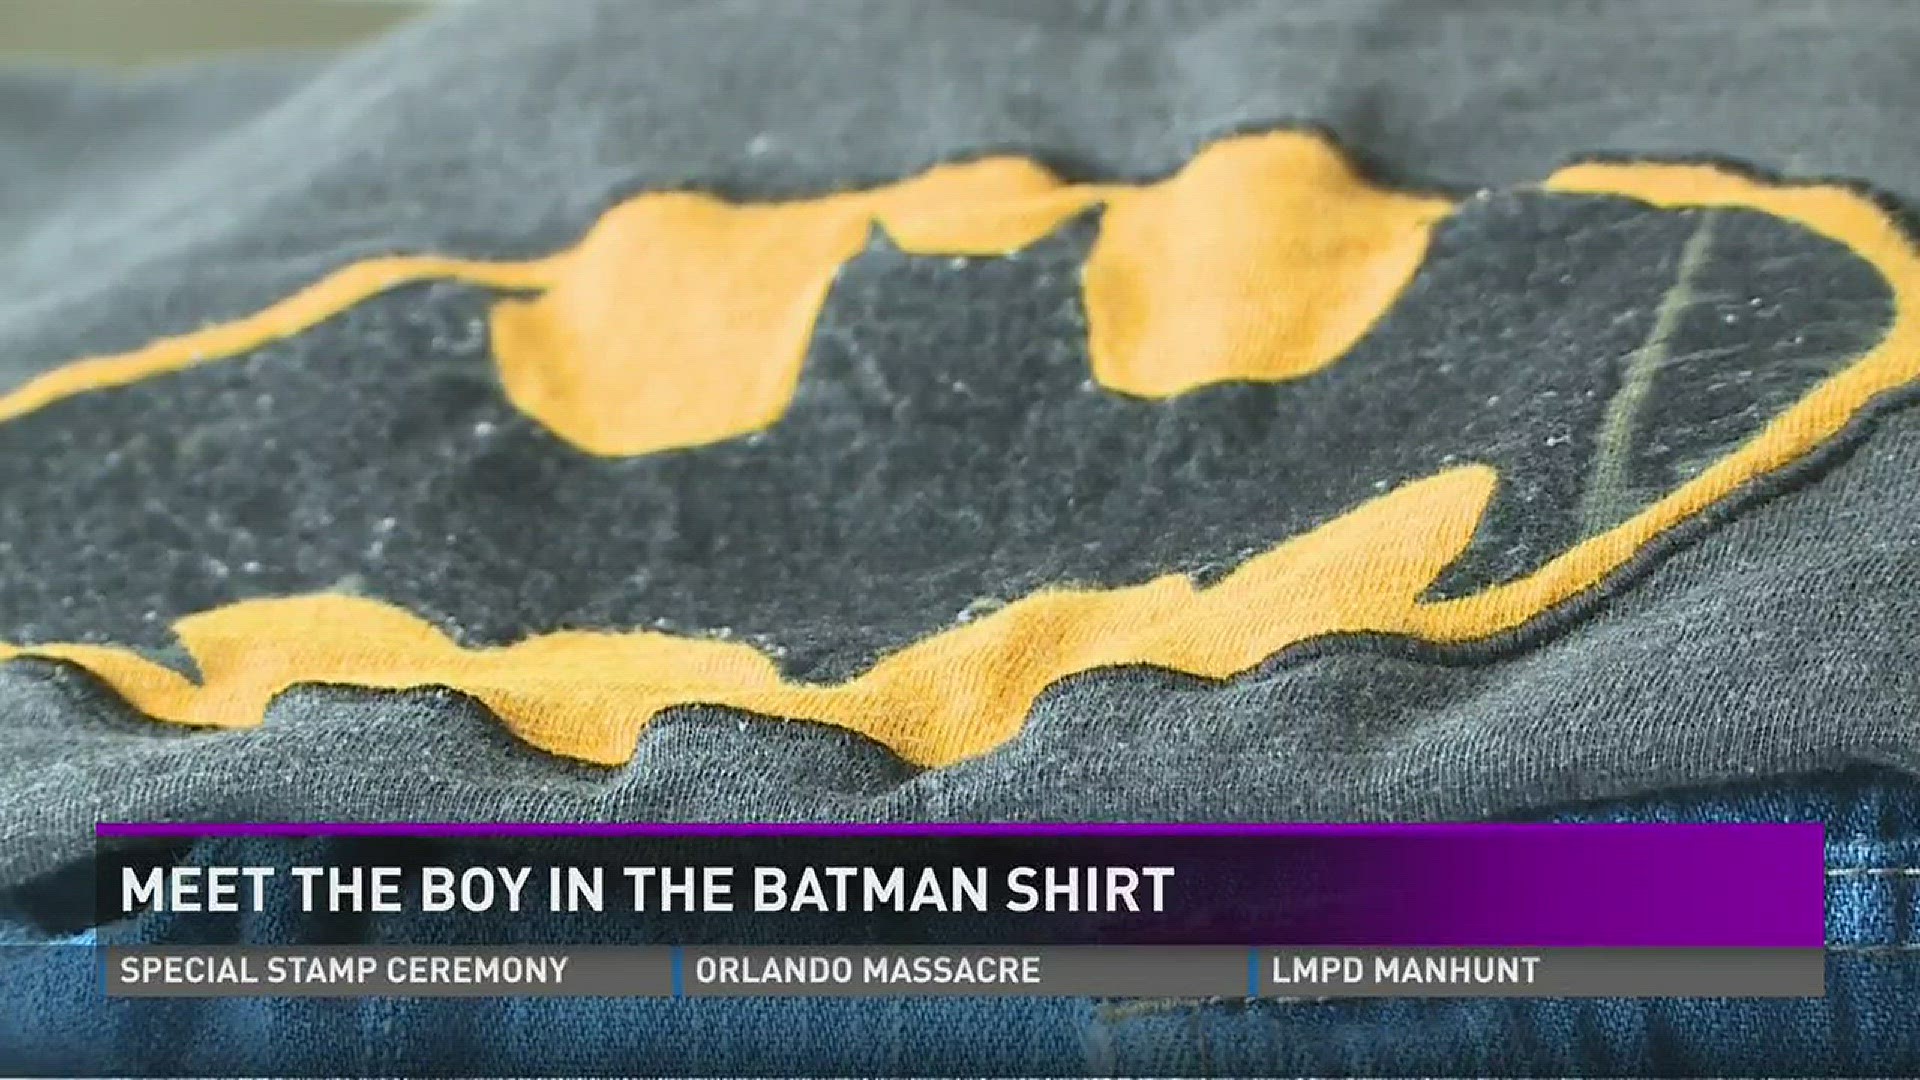 Meet the boy in the Batman shirt